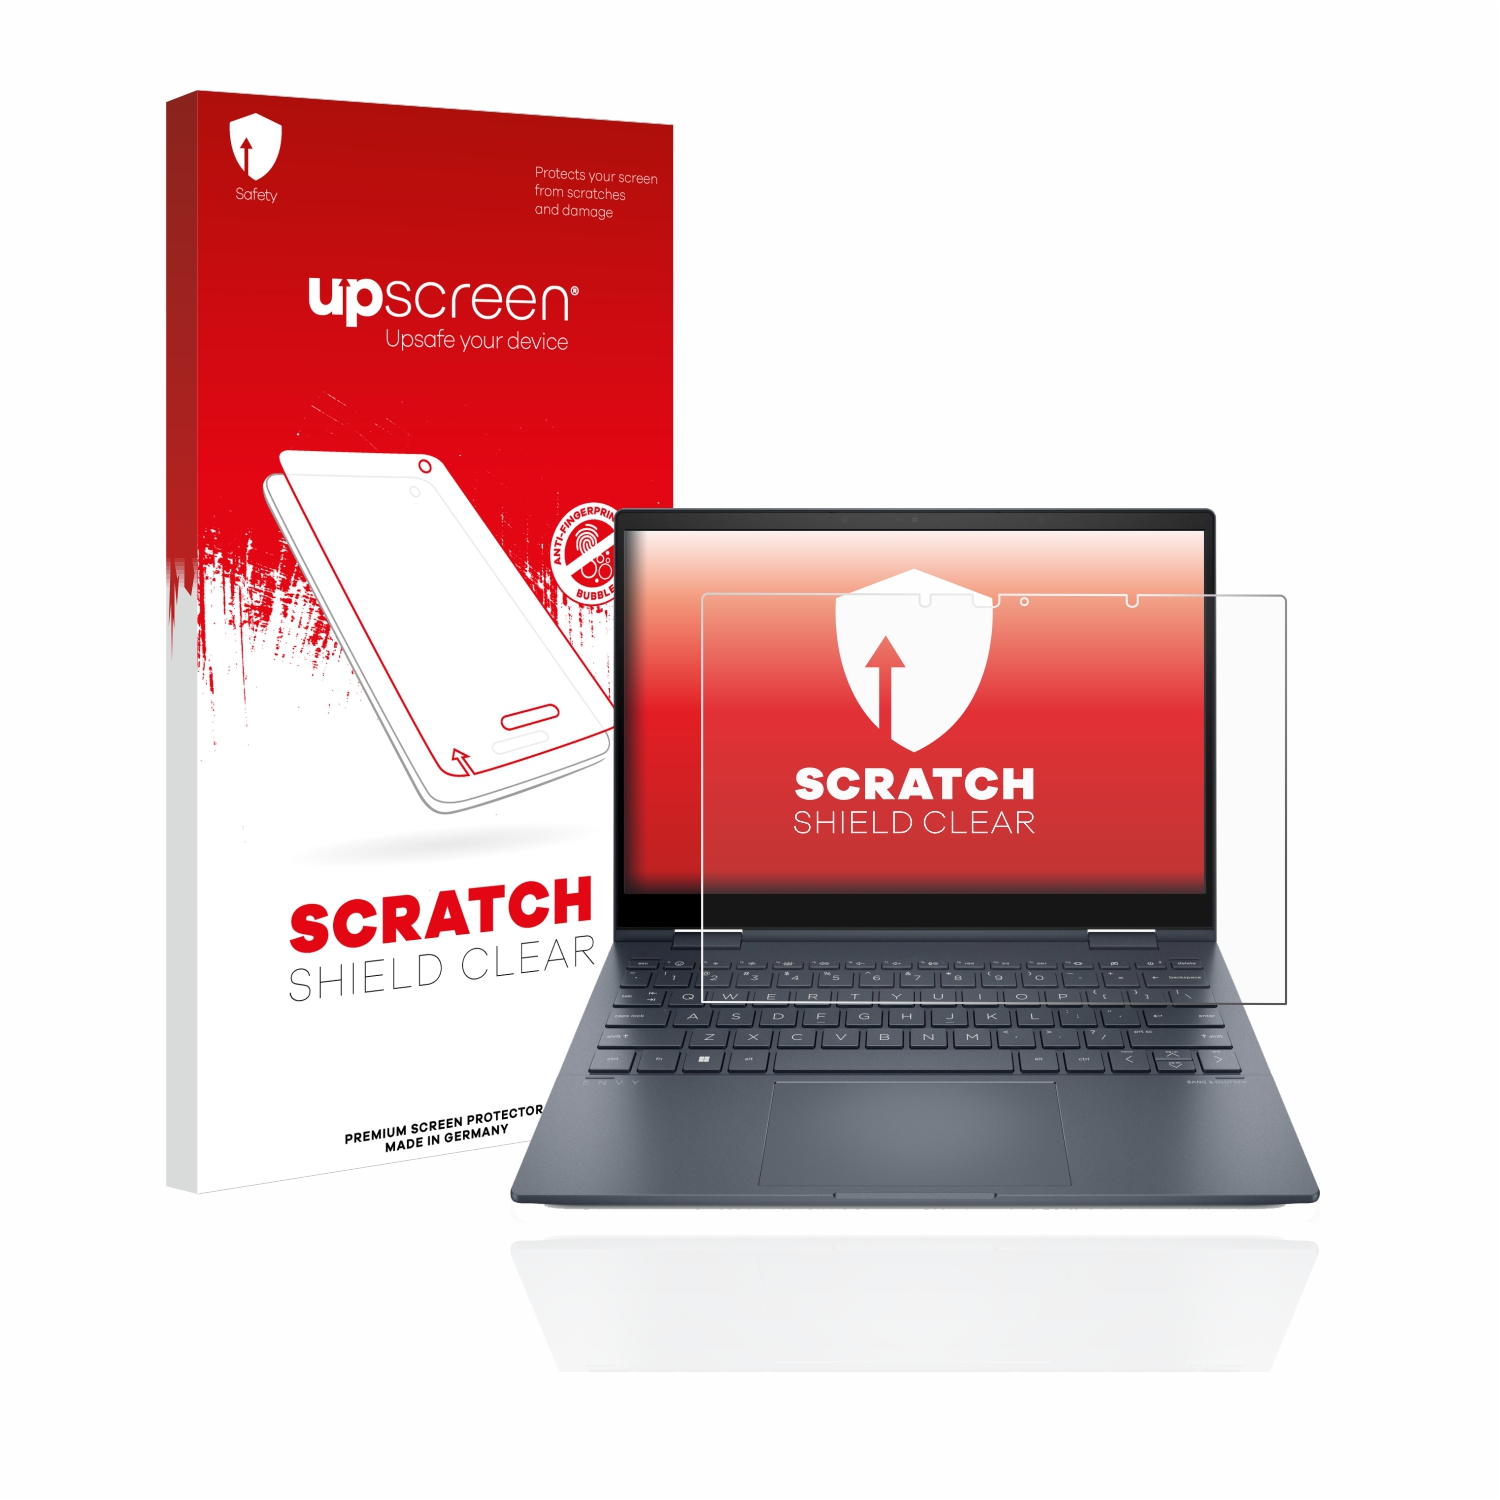 B F X X X 10 - upscreen Scratch Shield Clear Premium Screen Protector for HP Envy x360 13- bfxxx | protectionfilms24.com